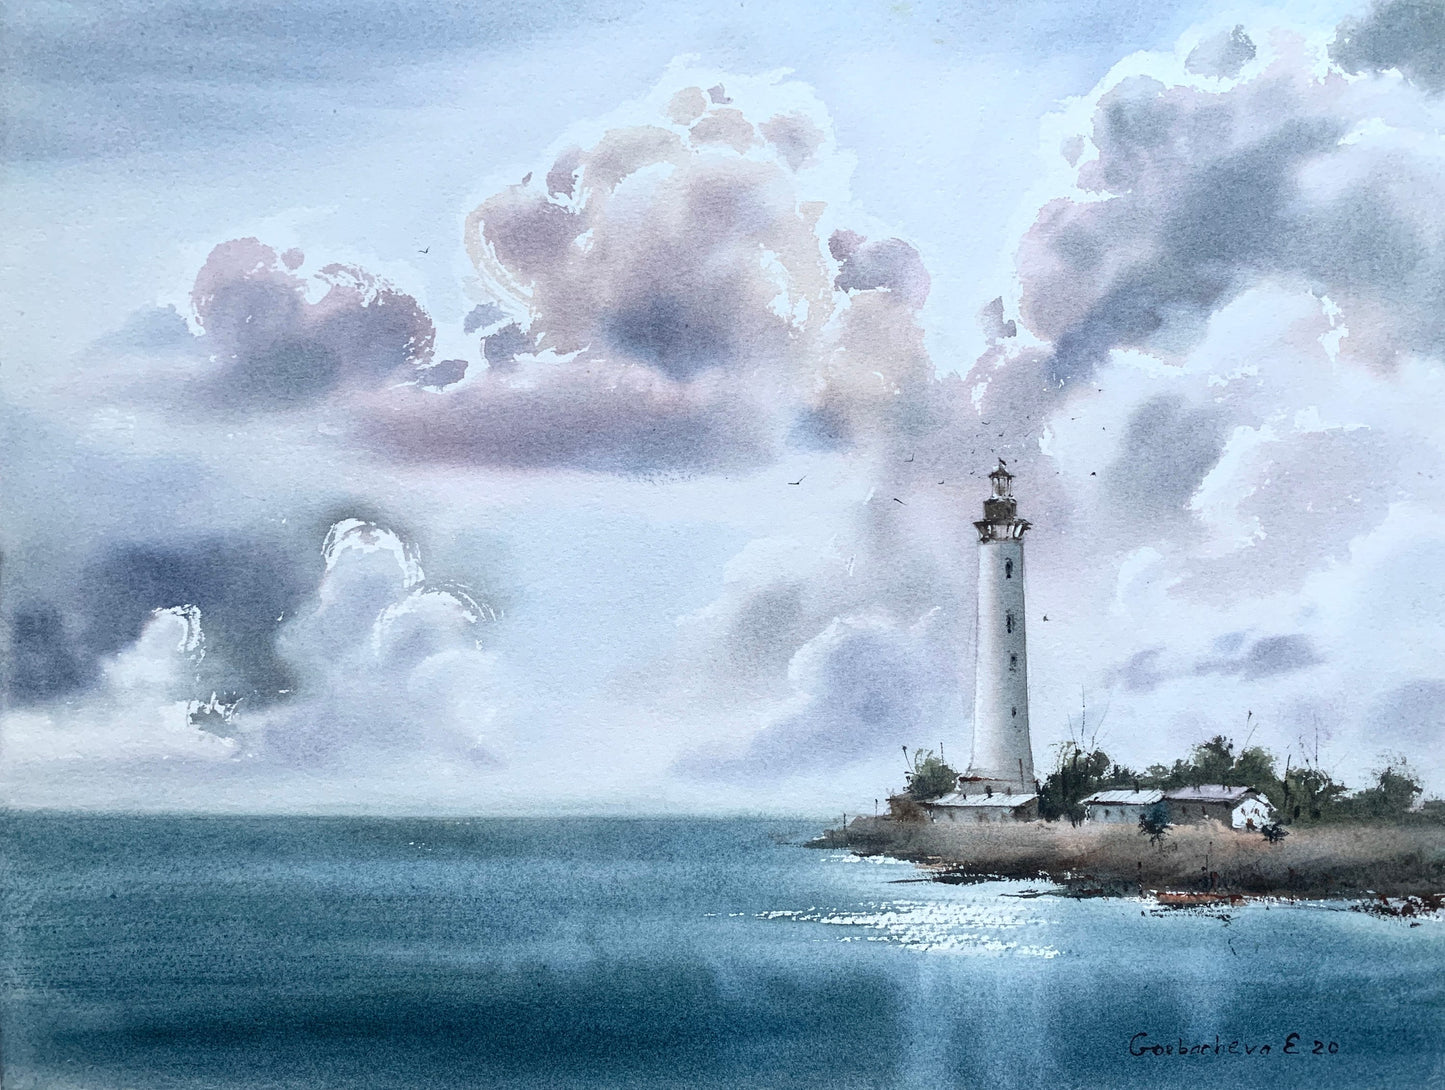 Lighthouse Original Painting, Nautical Watercolor Artwork, Coastal Wall Art Decor, Gifts For Men Unique, Blue Sea Clouds